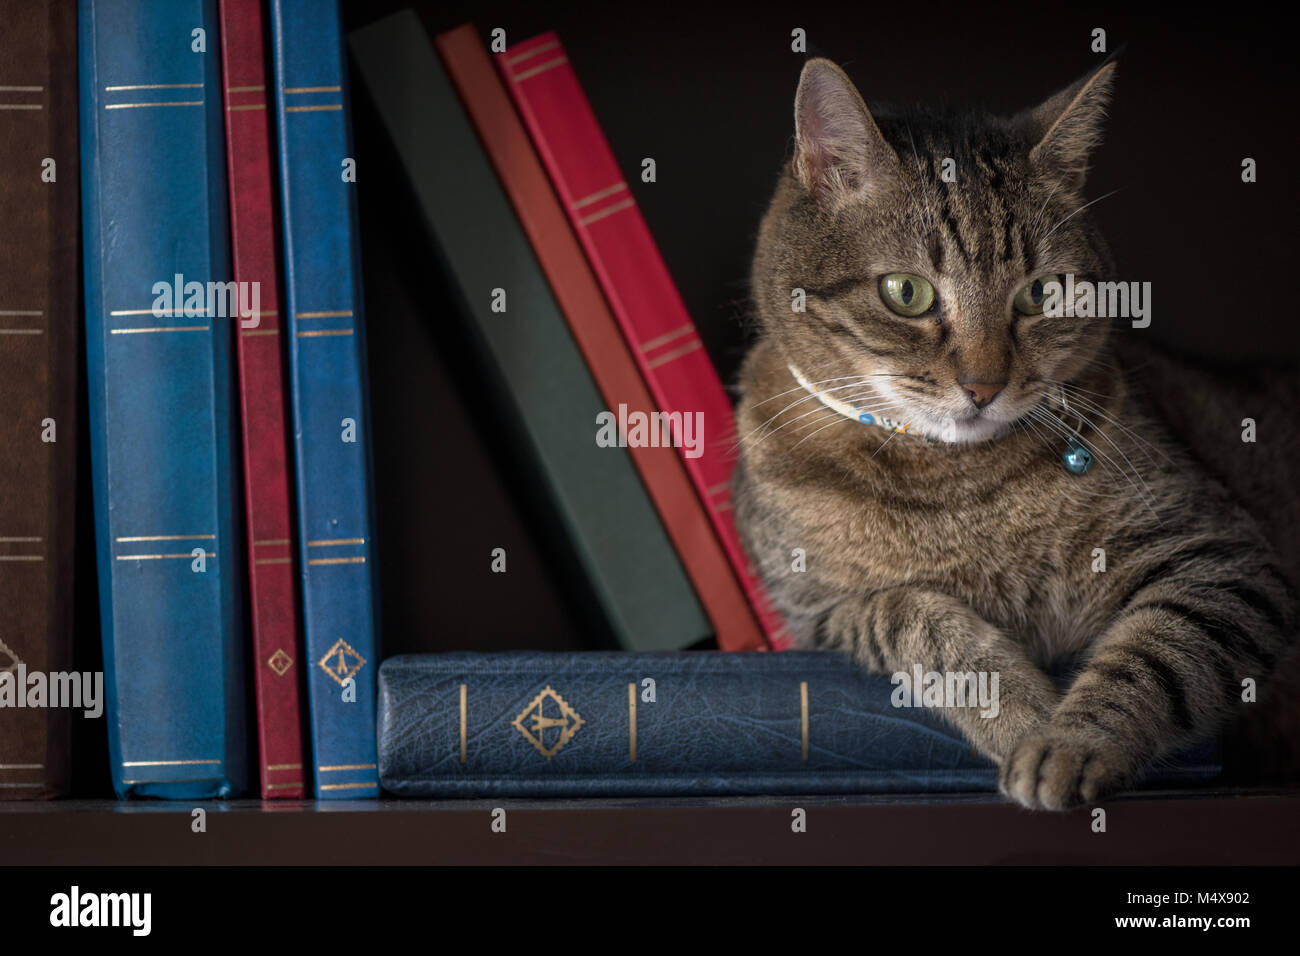 Tabby cat sitting on bookshelf Stock Photo